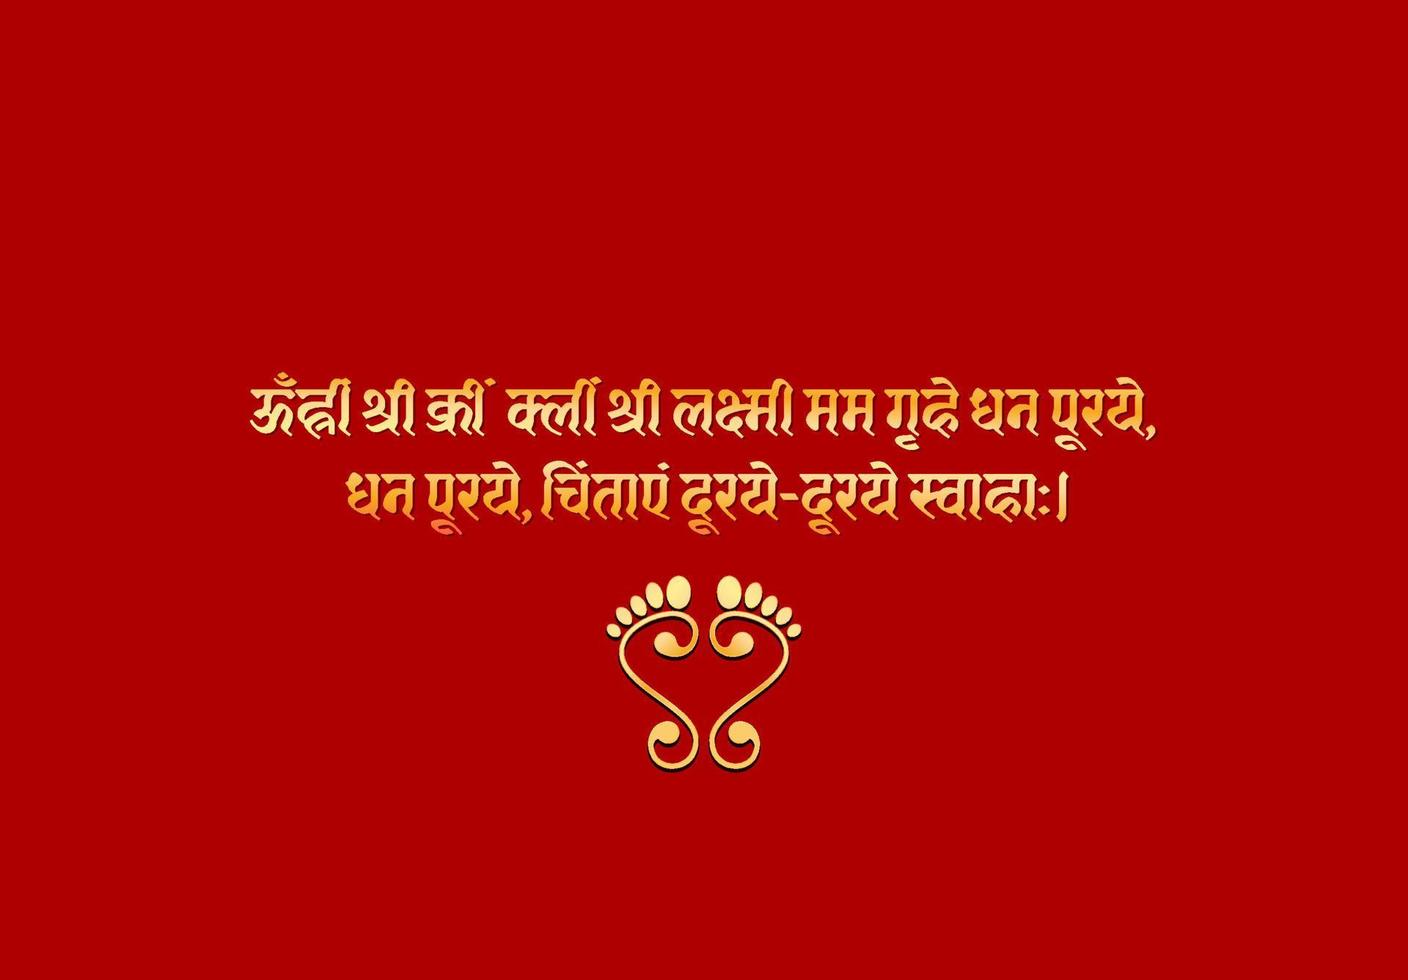 Laxmi praise in sanskrit script. Mahalaxmi mantra with laxmi's foot prints. vector